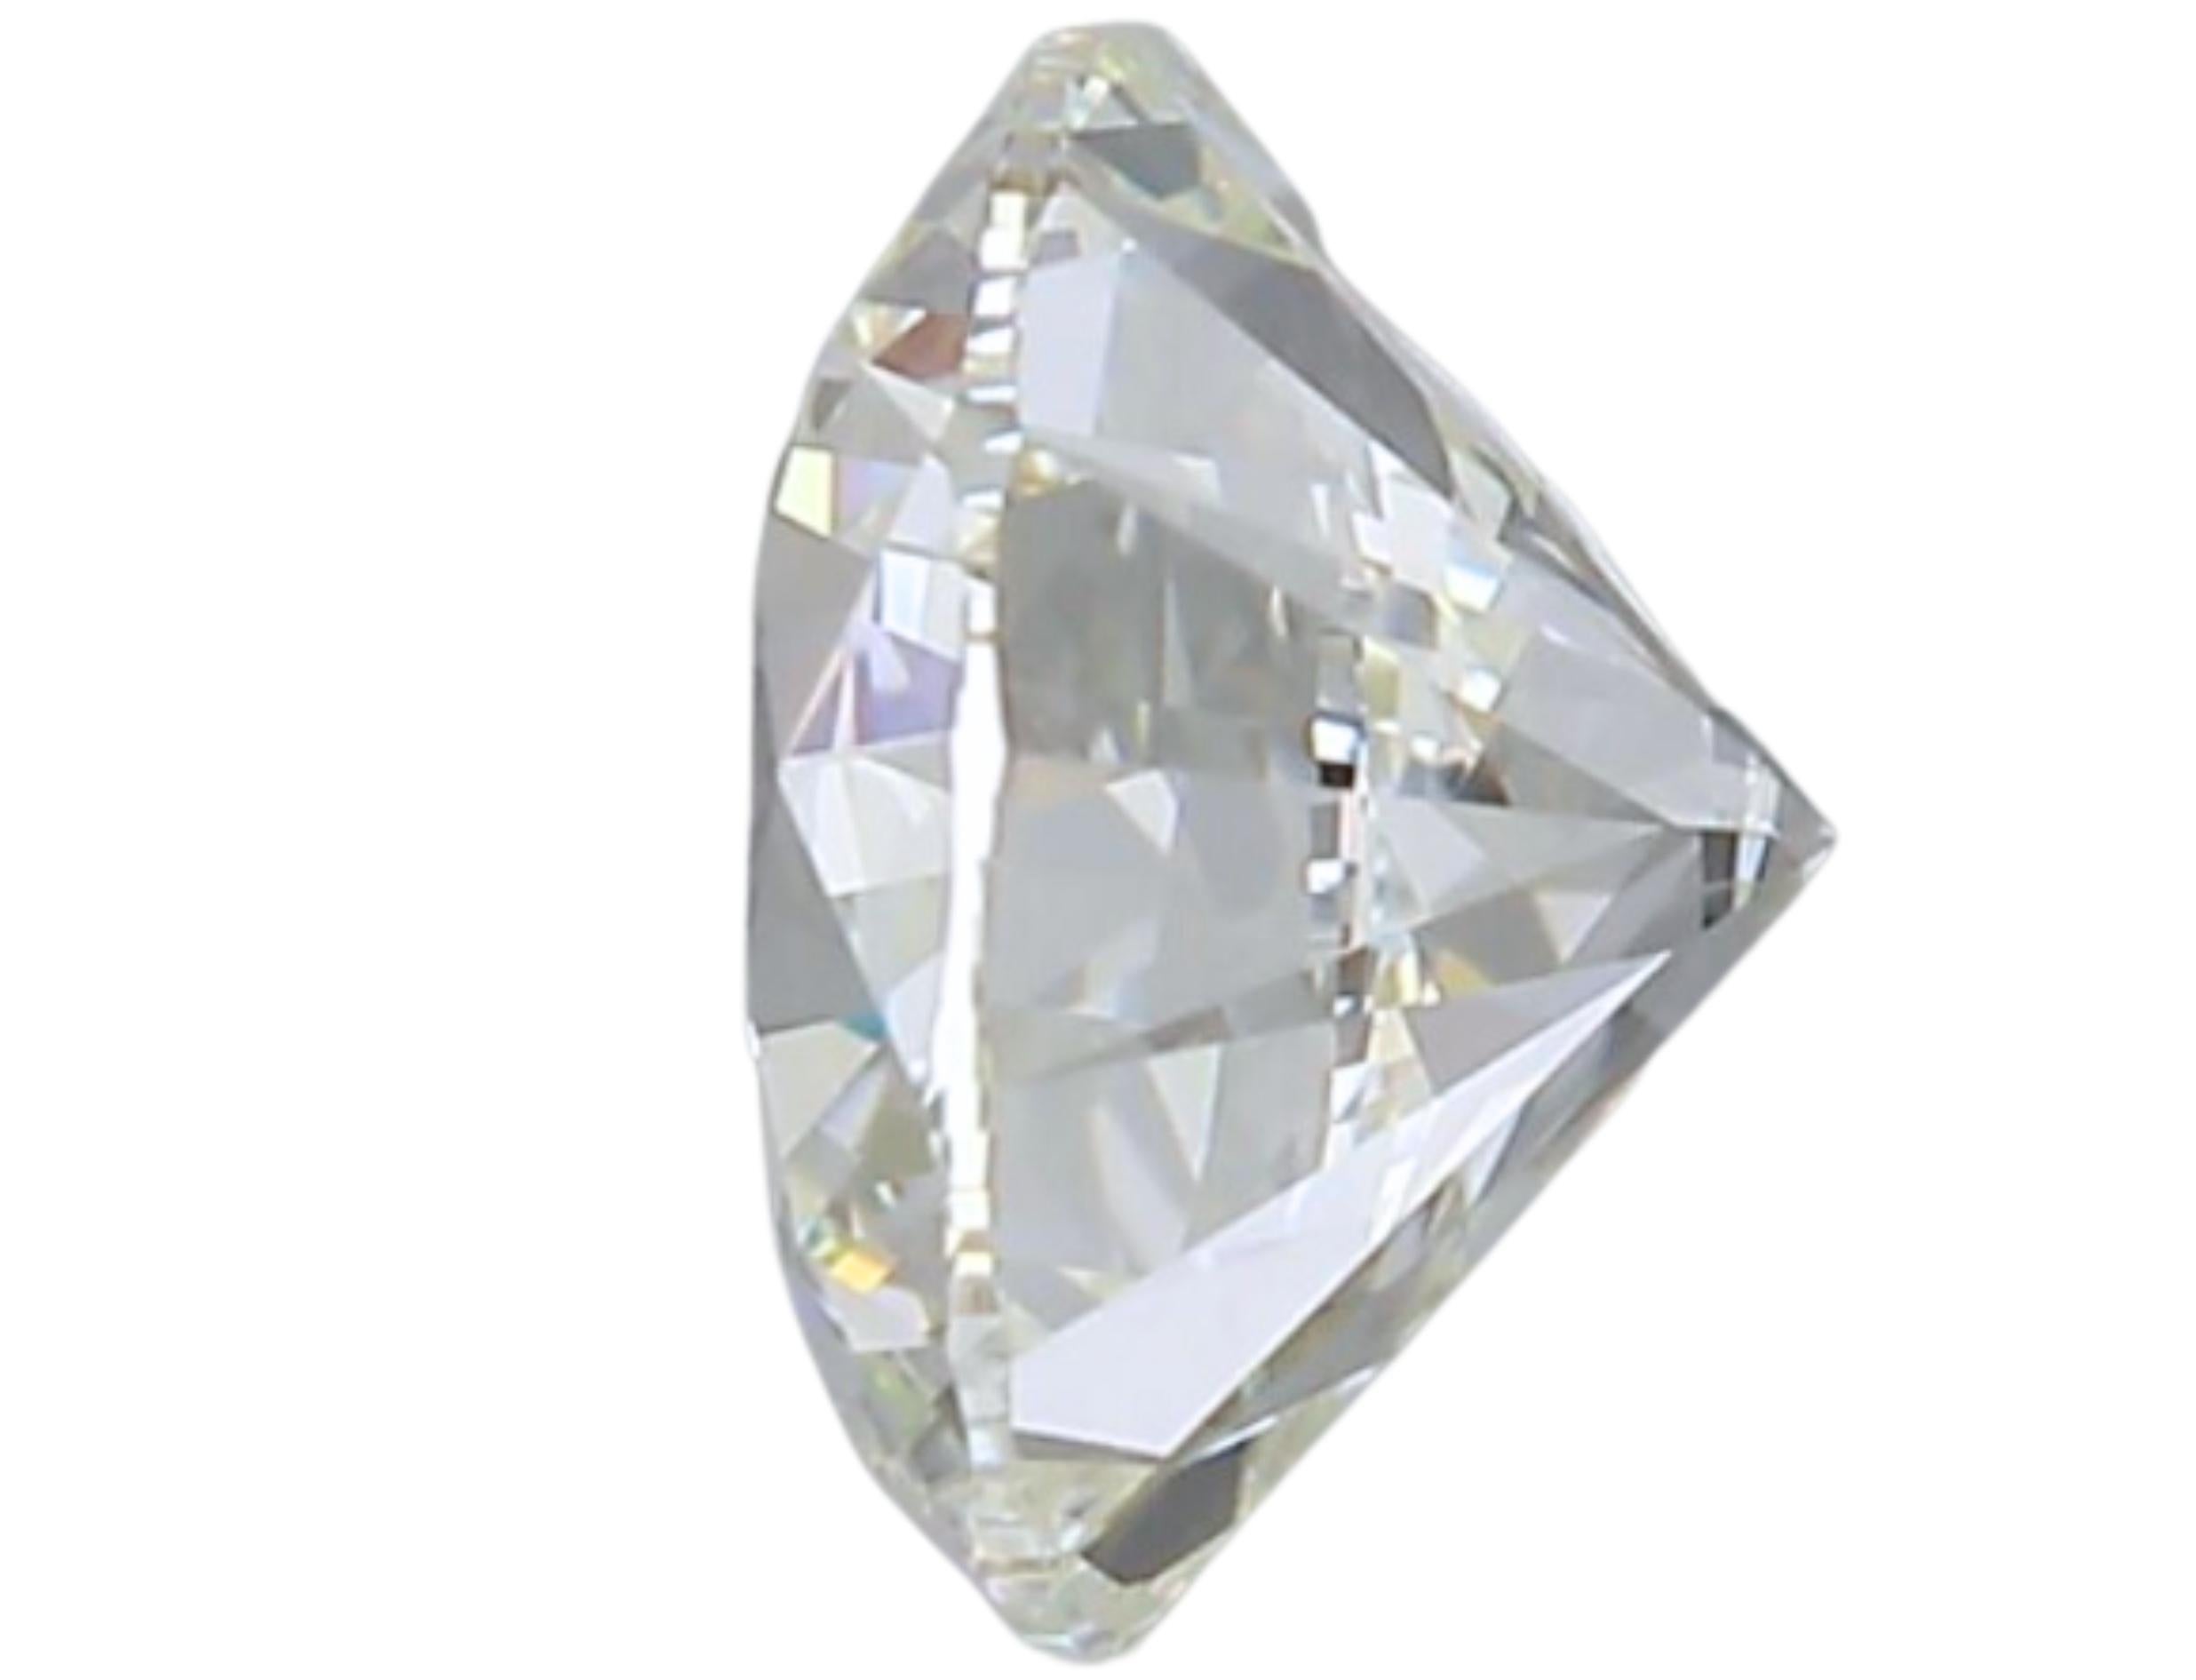 Women's Sparkling 0.70 carat Round Cut Brilliant Diamond For Sale